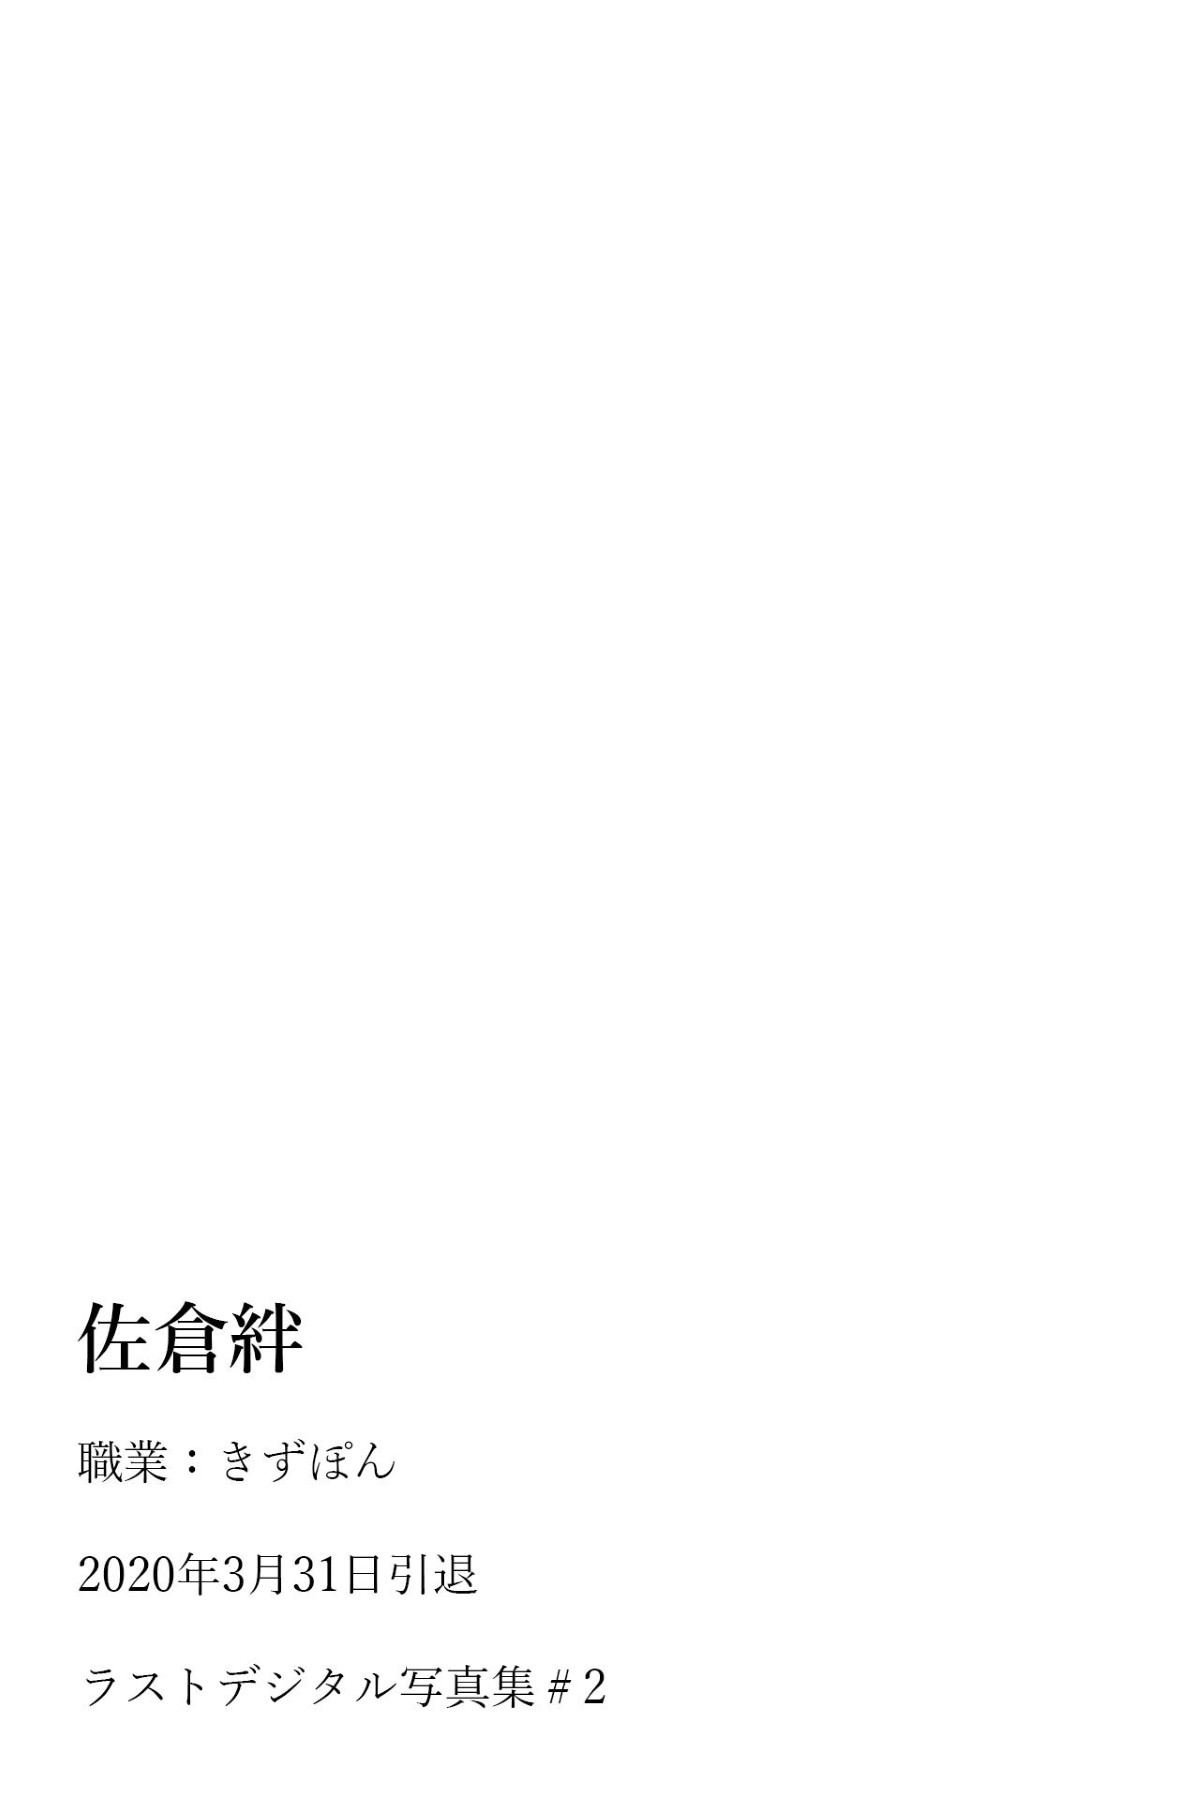 Digital Photobook 2020 07 01 Sakura Kizuna 佐倉絆ラス I Love You 0001 5810034653.jpg